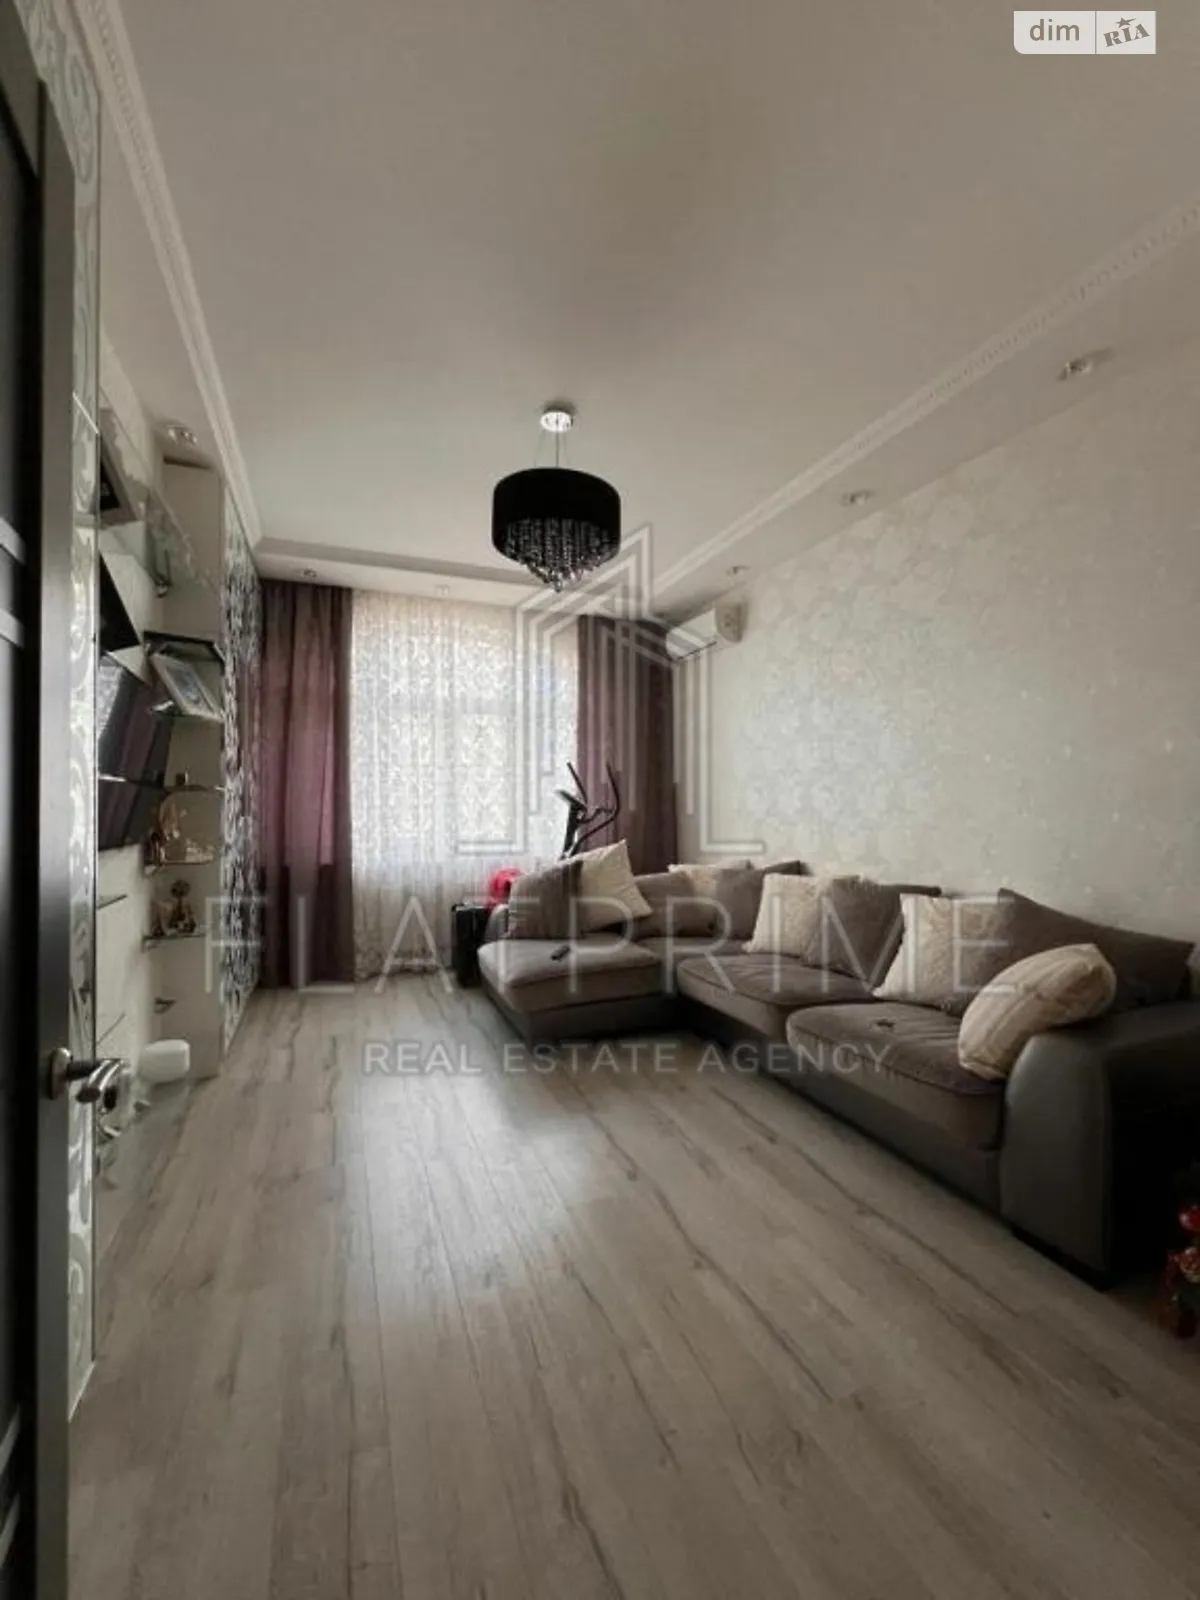 Продается 3-комнатная квартира 90 кв. м в Киеве, ул. Вячеслава Черновола, 29А - фото 1